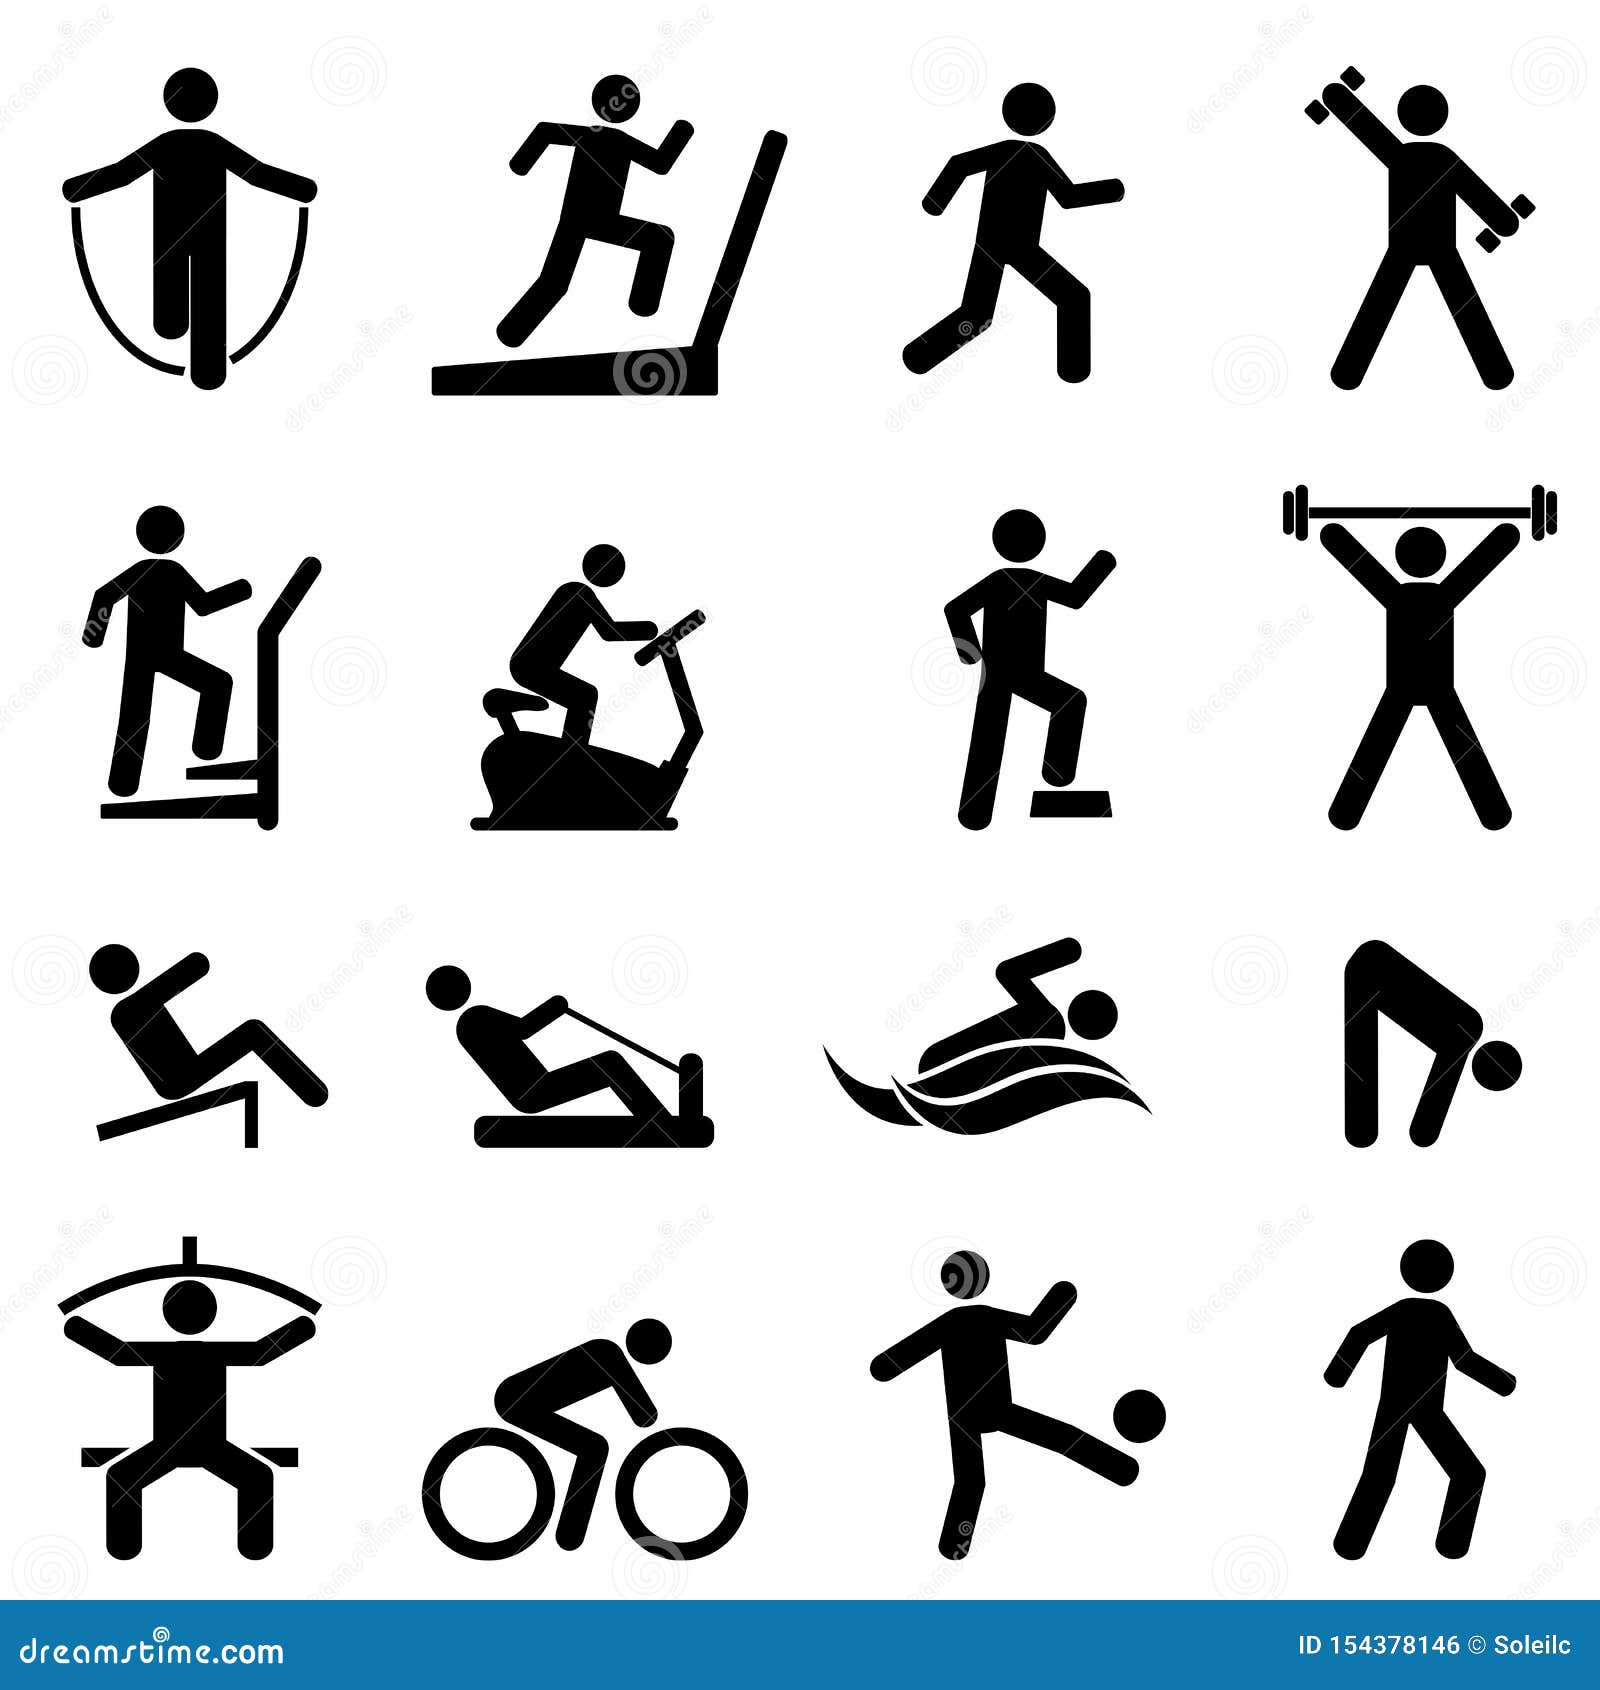 exercise, fitness, gym icon set